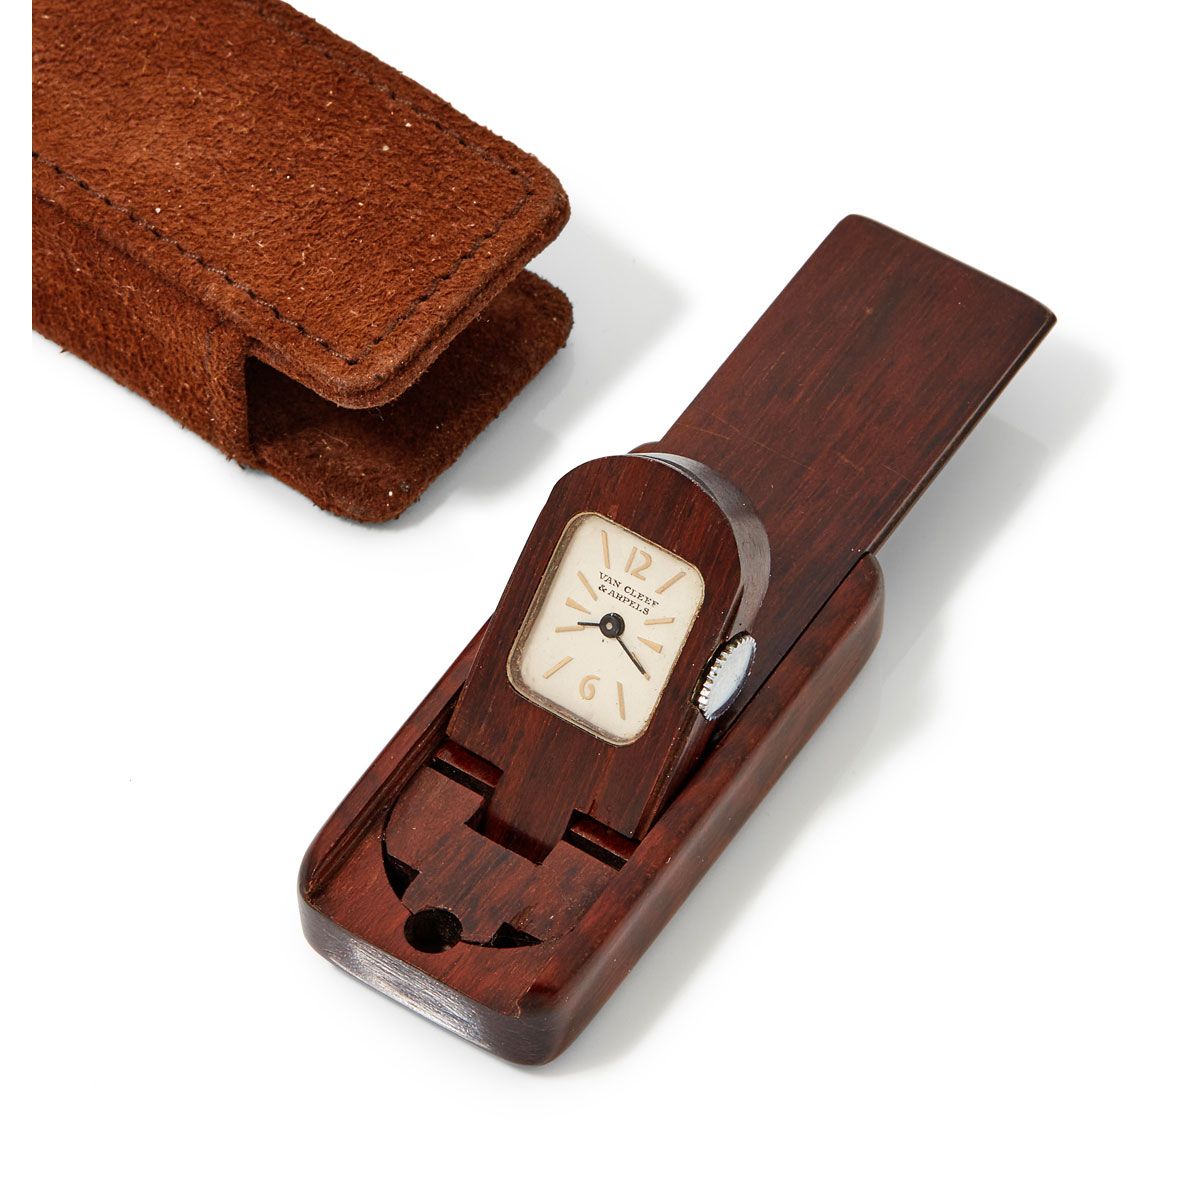 Null Van Cleef & Arpels, orologio da borsetta, 1960 circa.

Un mini orologio da &hellip;